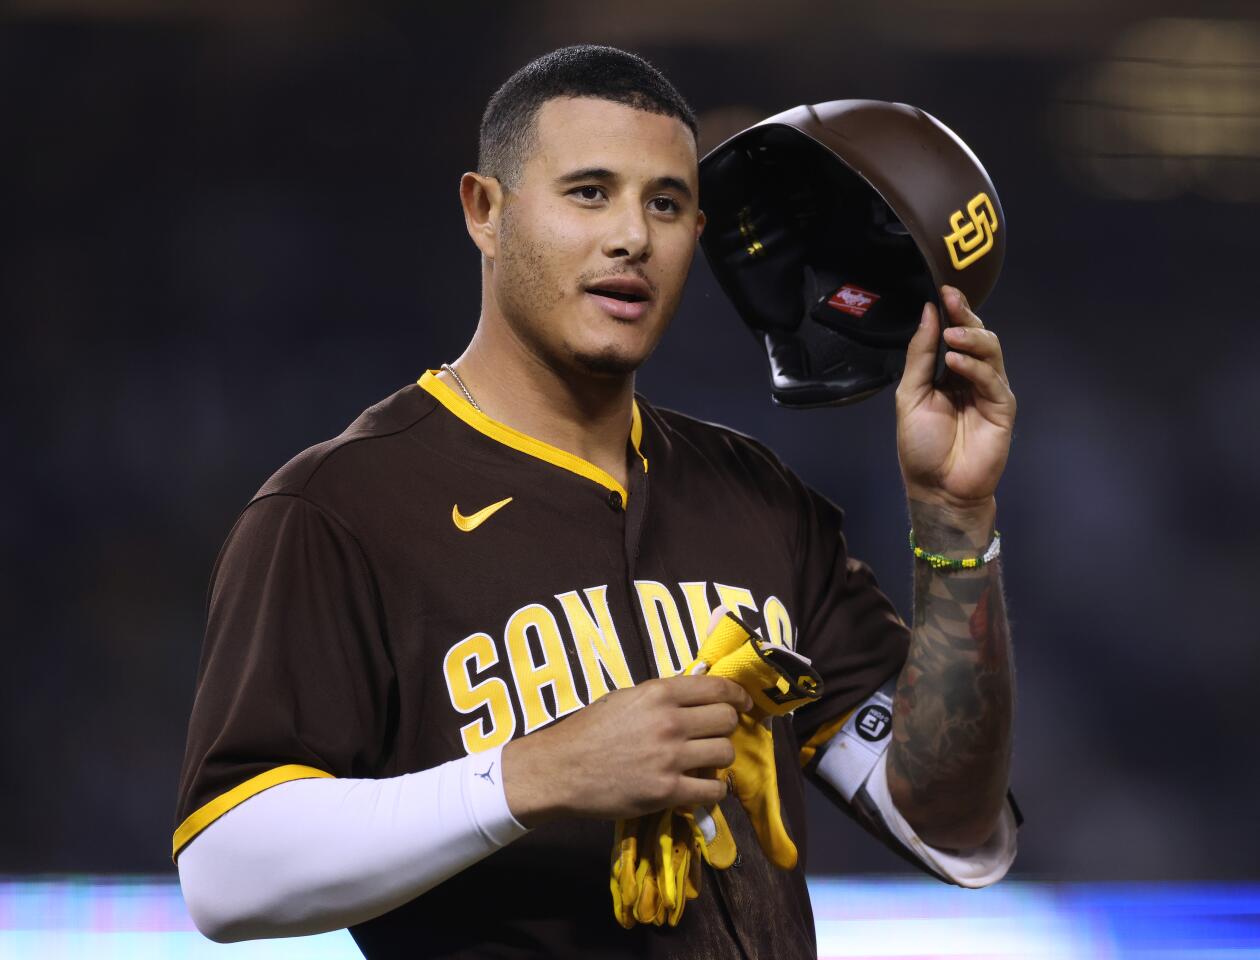 Tatis, Machado among 20 most popular MLB jerseys in 2020 - The San